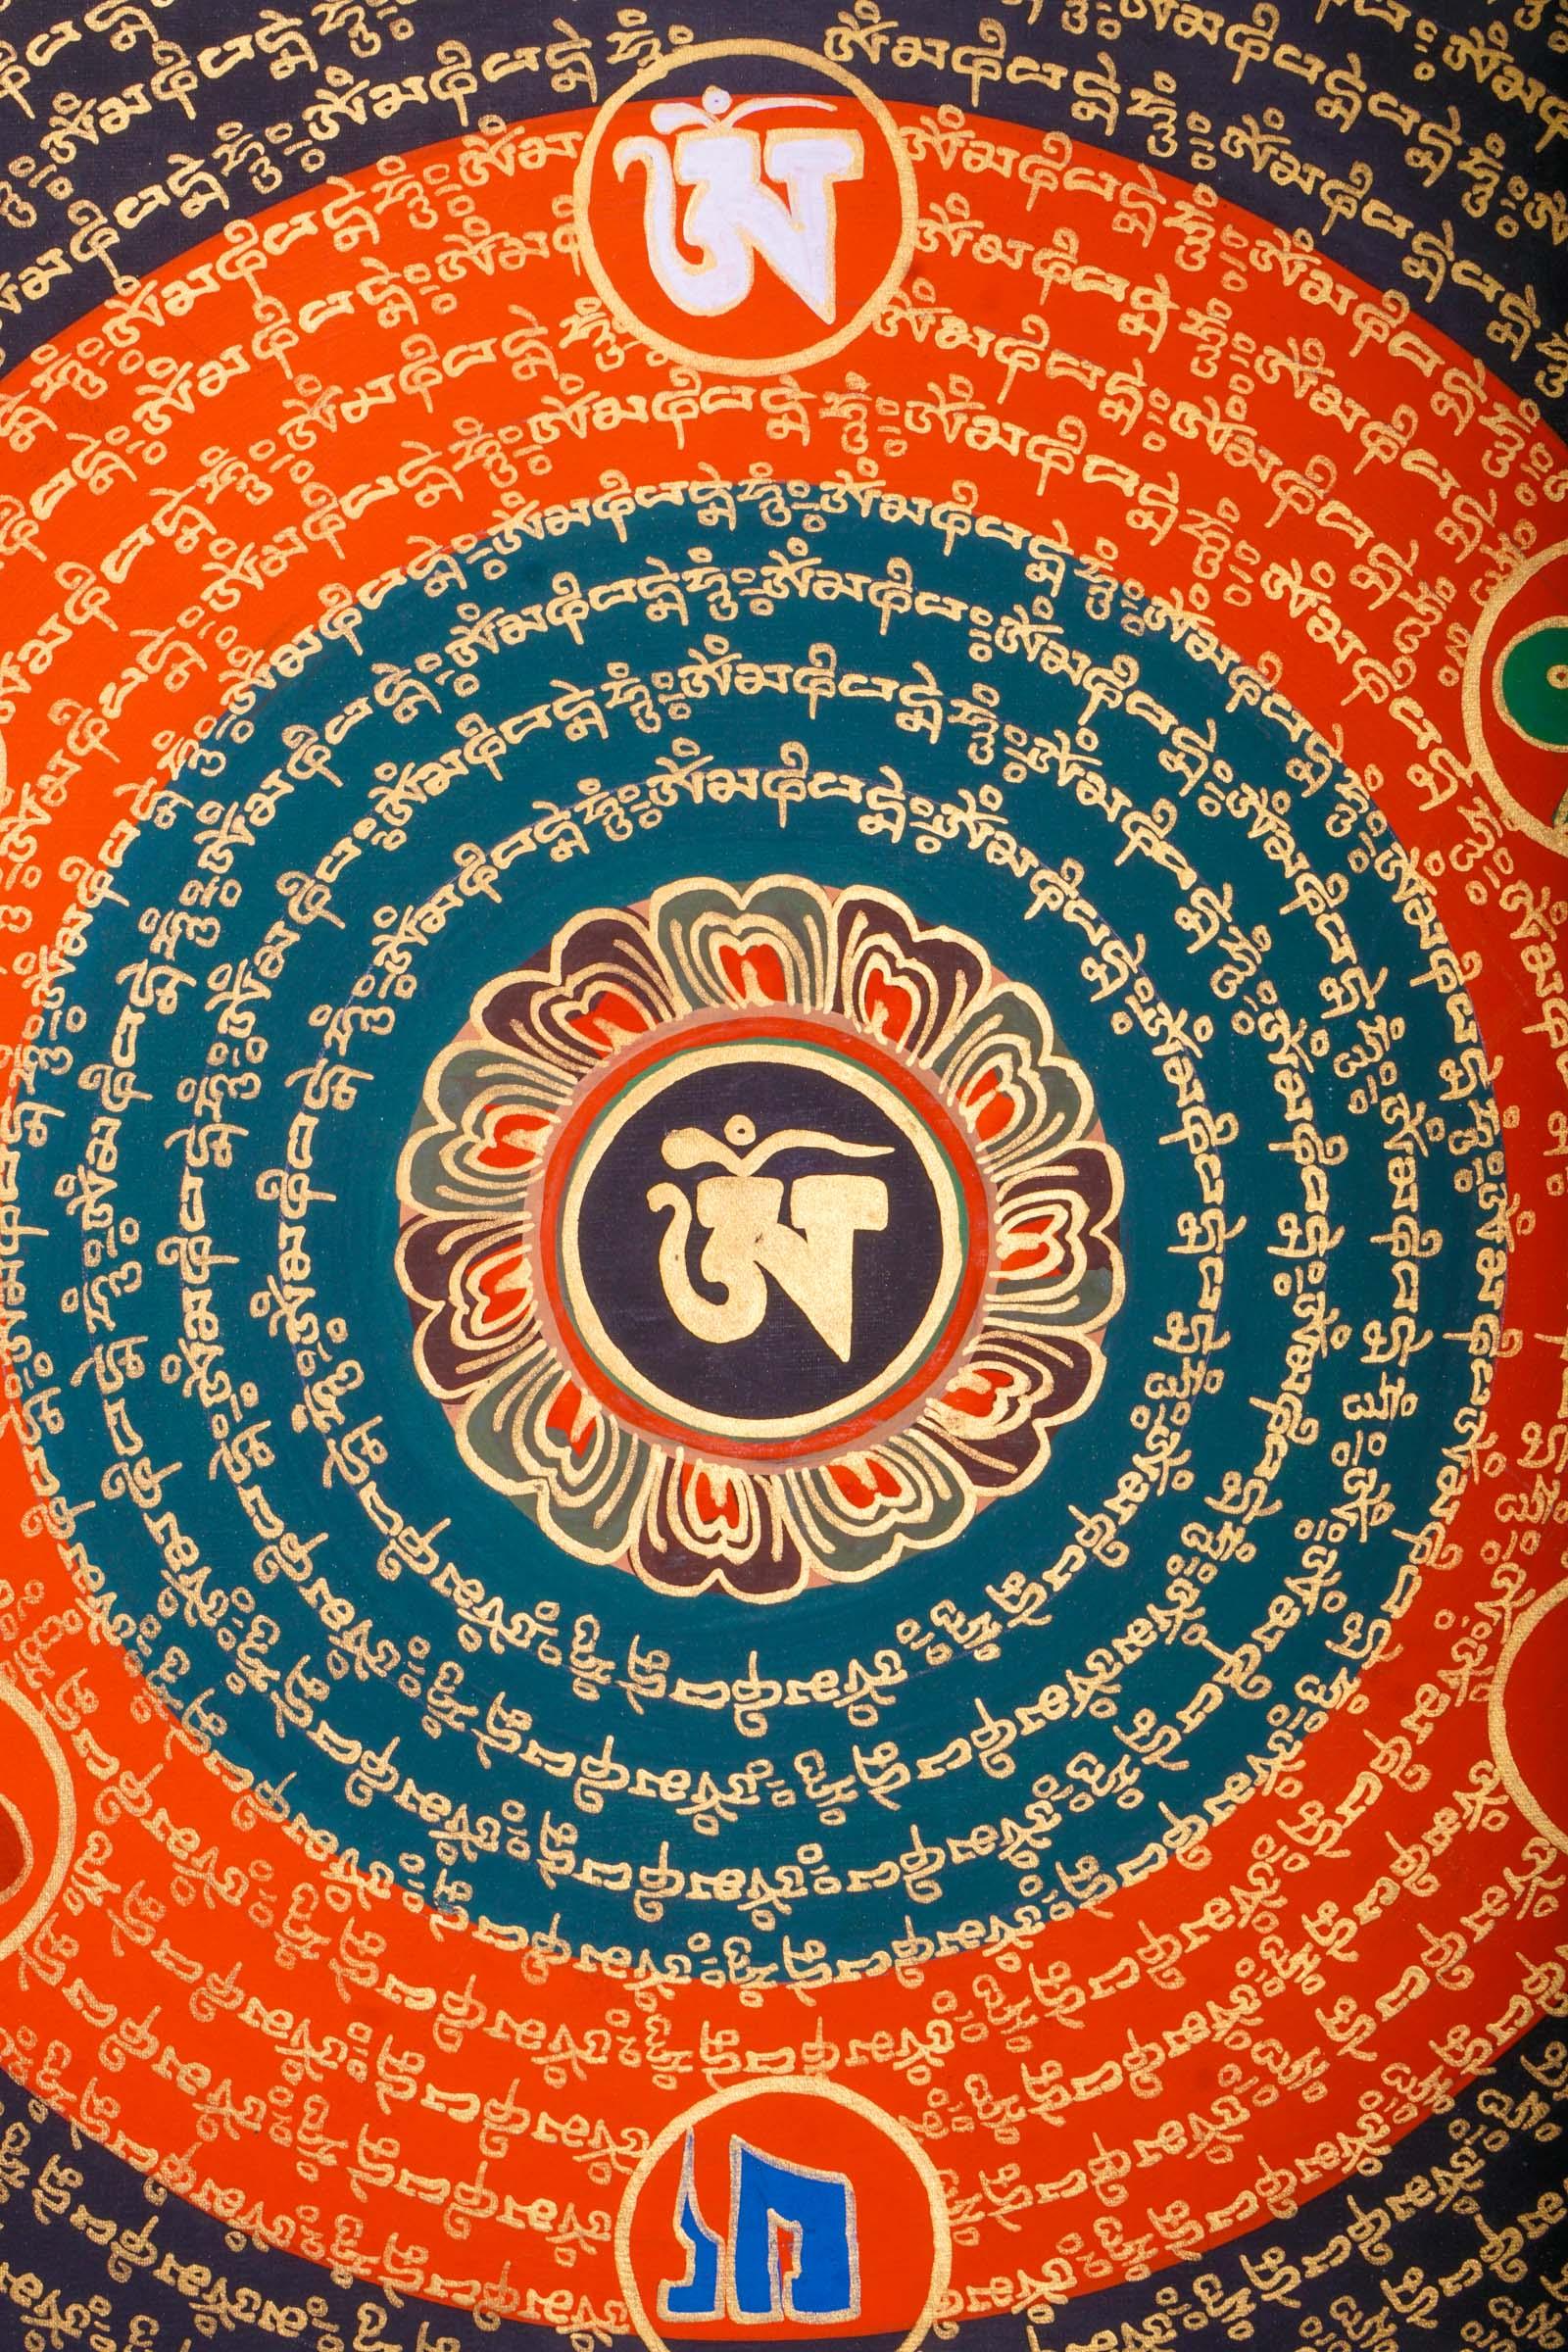 Mandala Thangka Painting